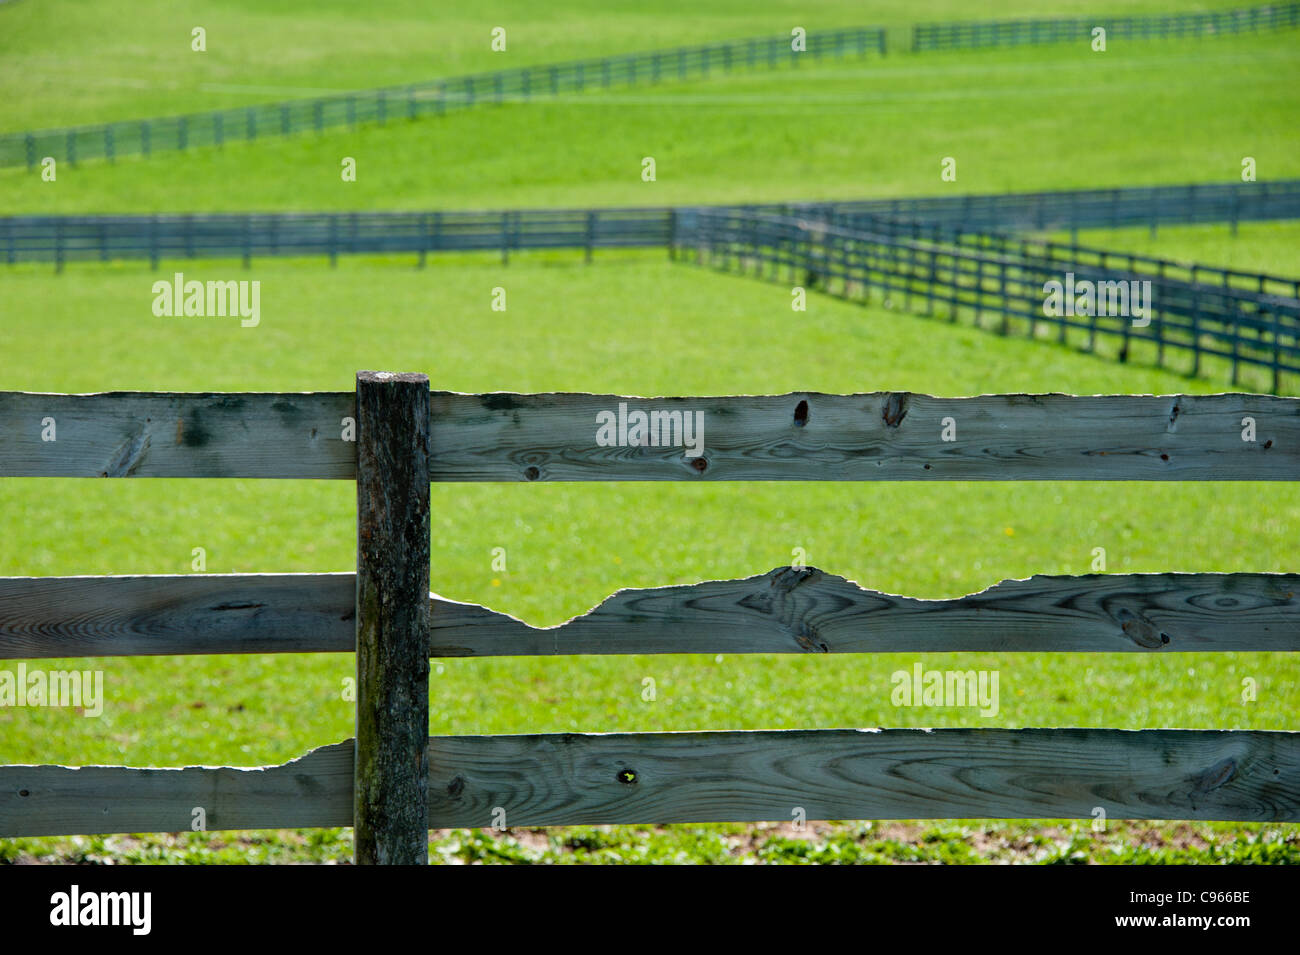 Fencing across green grass on a horse farm Stock Photo